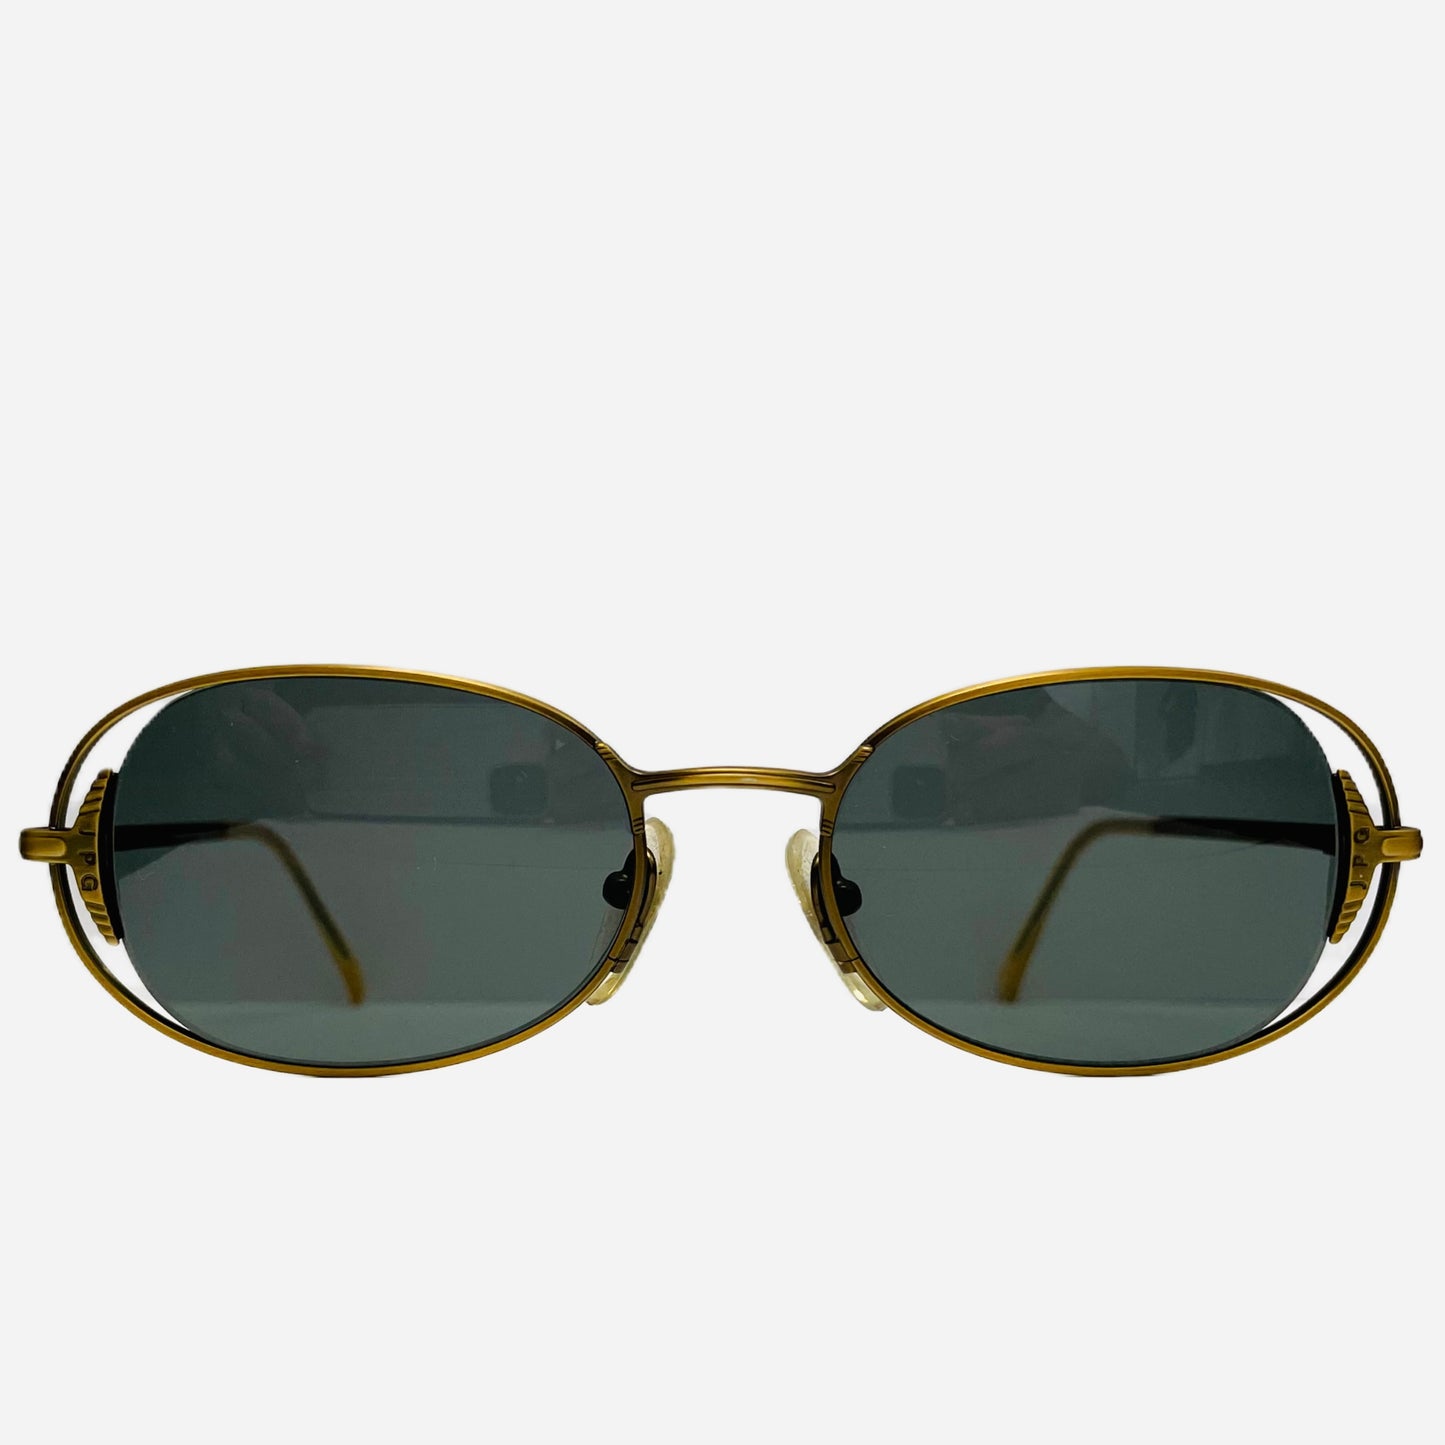 Vintage-Jean-Paul-Gaultier-Sonnenbrille-Sunglasses-Model56-3172-made-in-japan-the-seekers